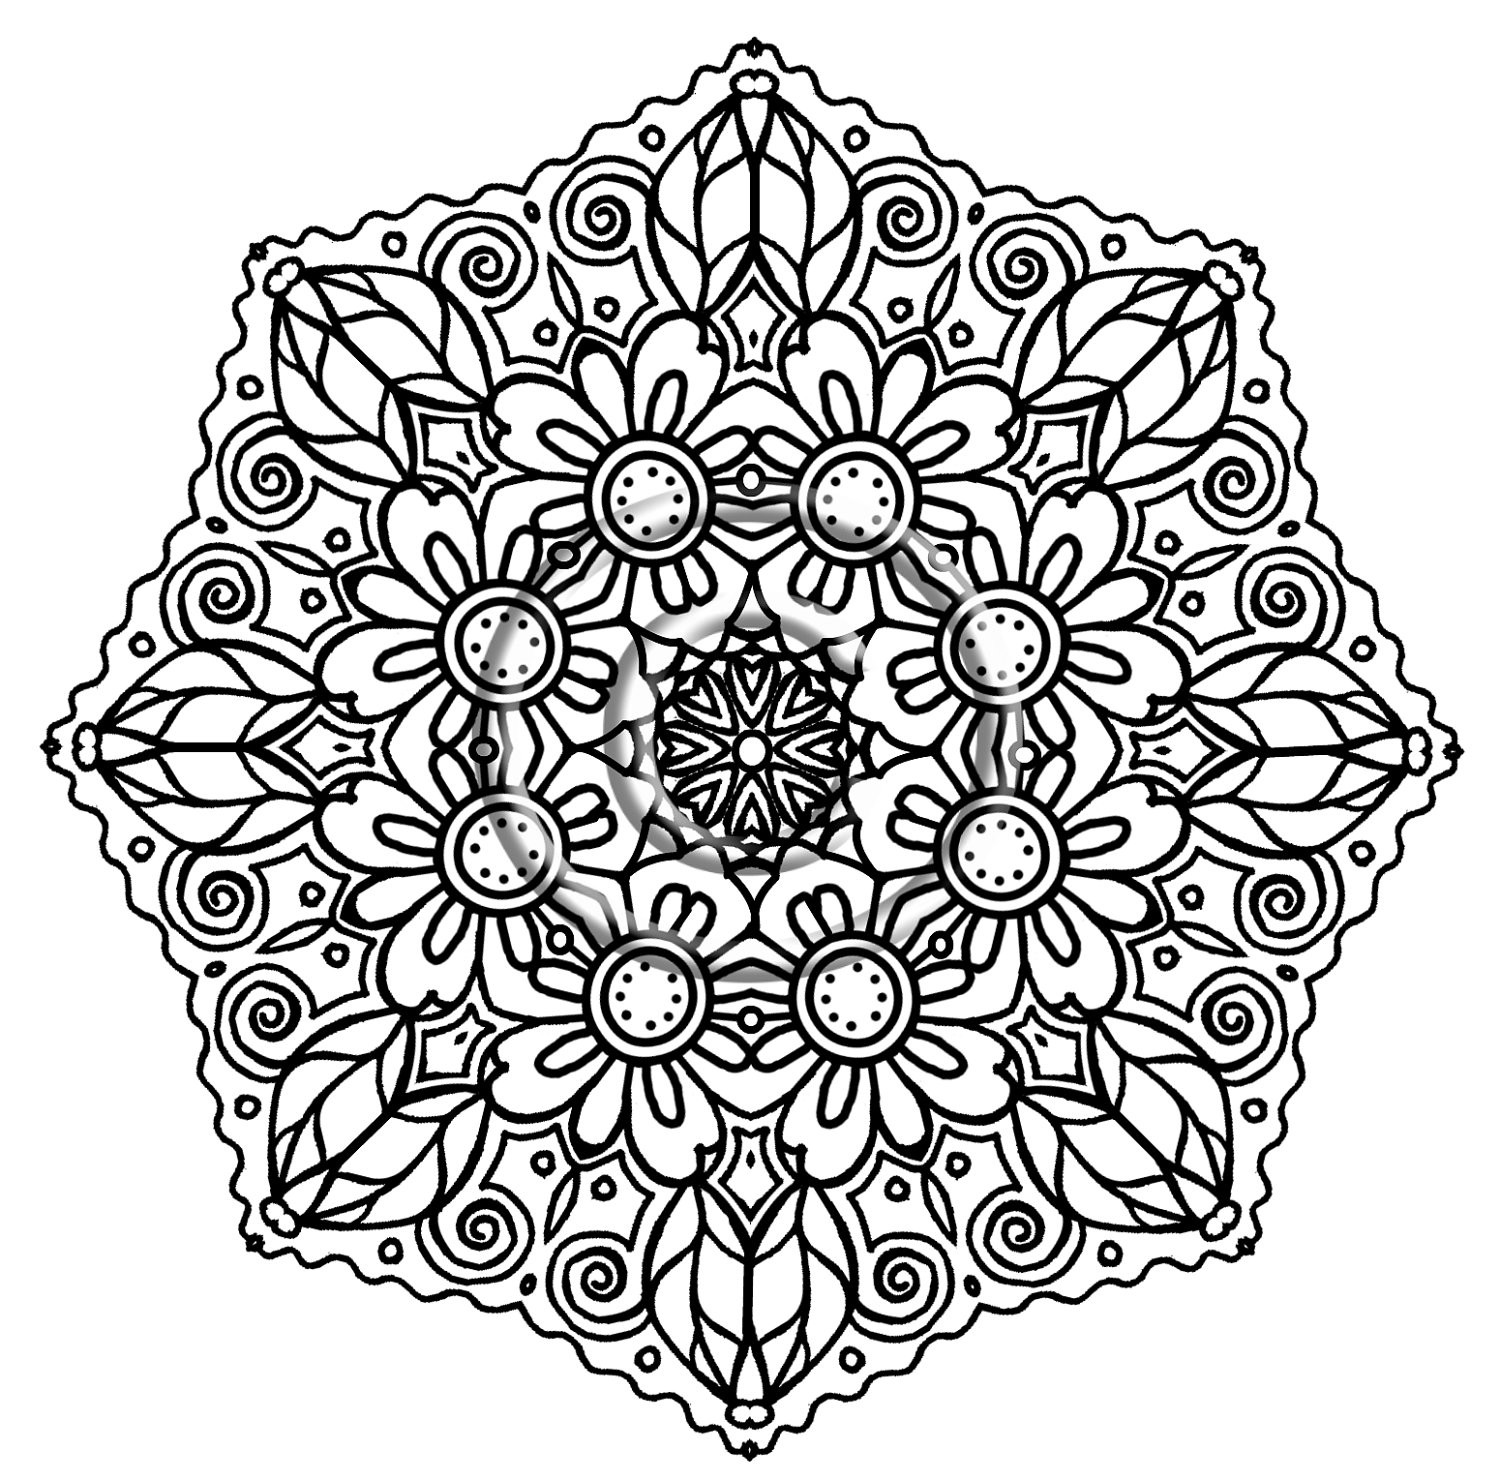 Advanced Mandala Coloring Pages at GetDrawings | Free download